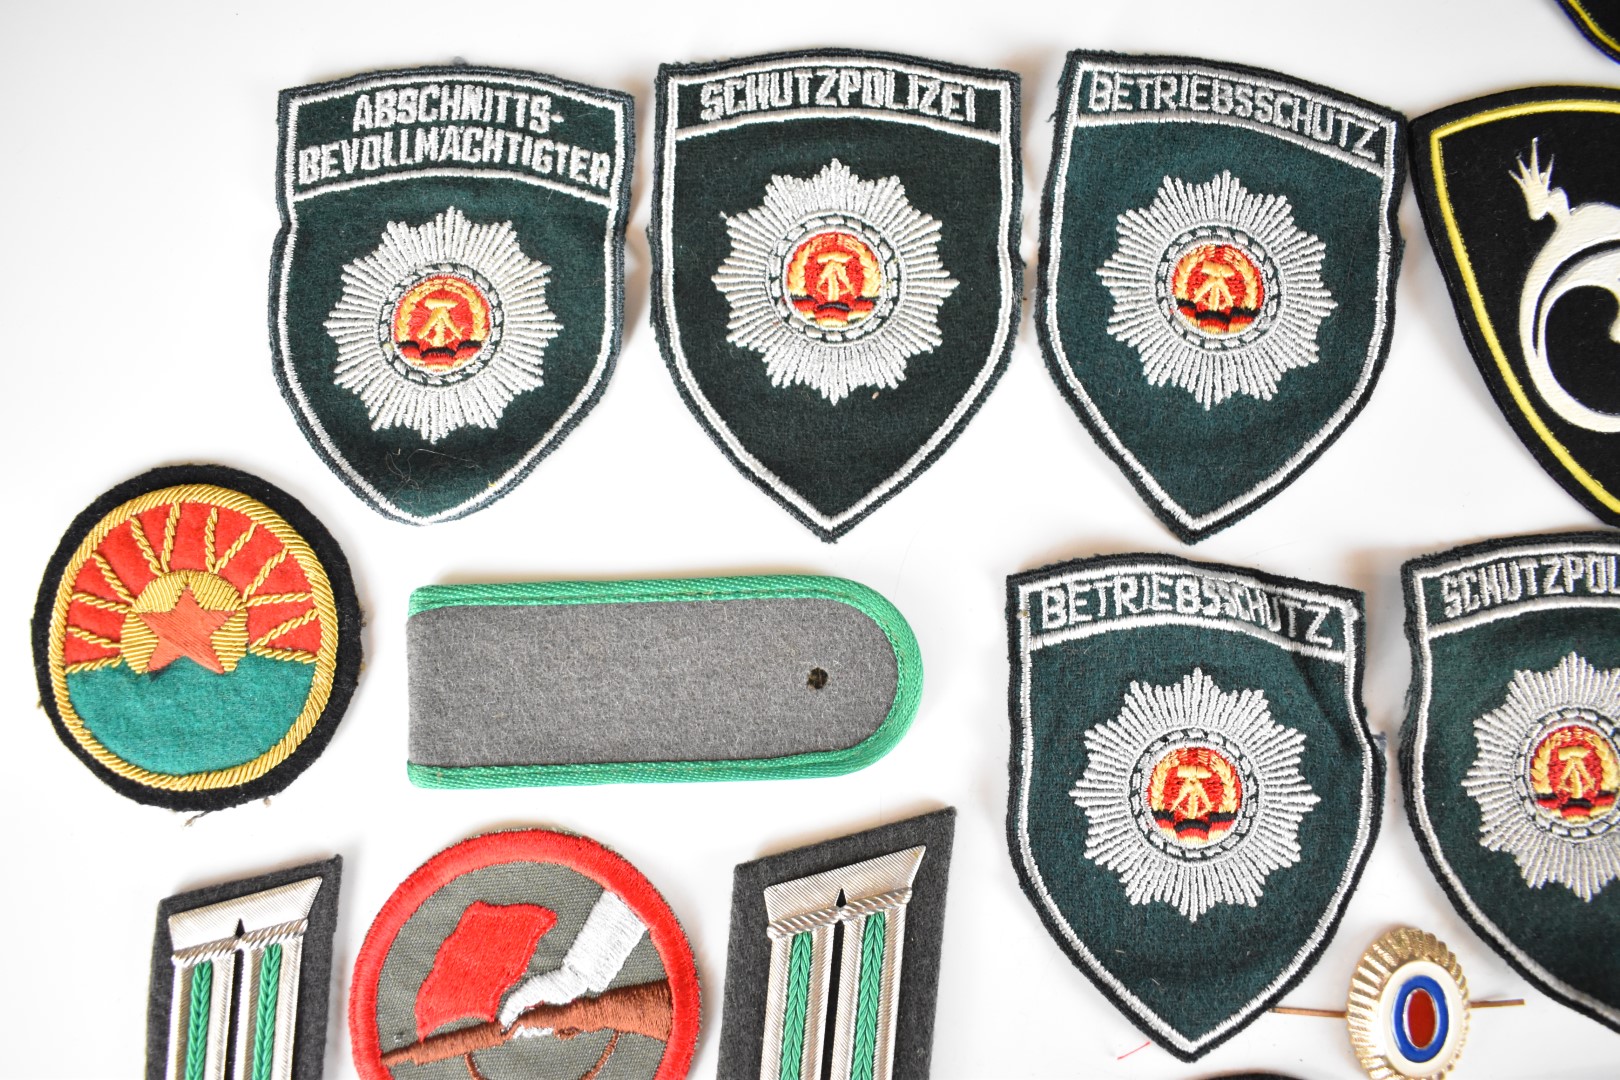 Russian / East German cloth badges, rank insignia etc - Image 2 of 6